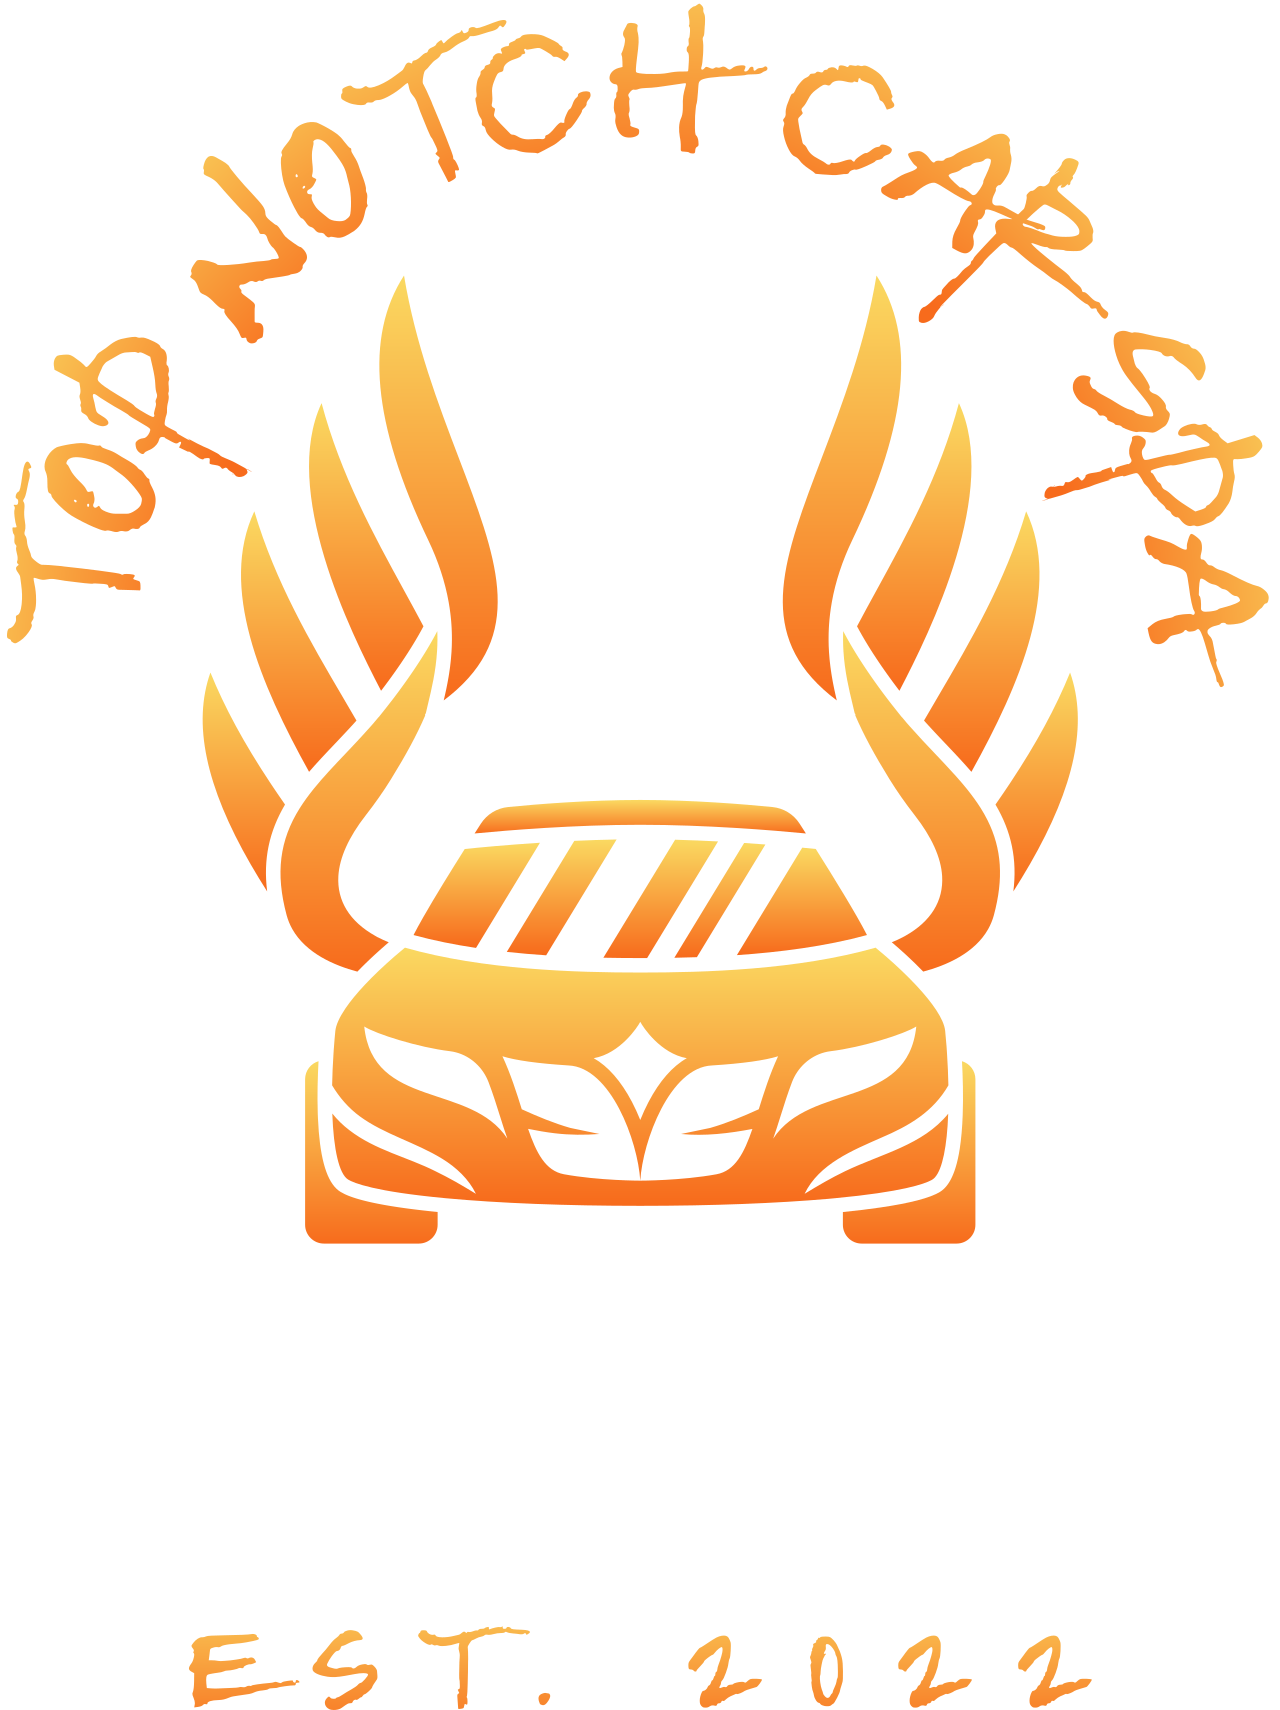 TOP NOTCH CAR SPA's logo